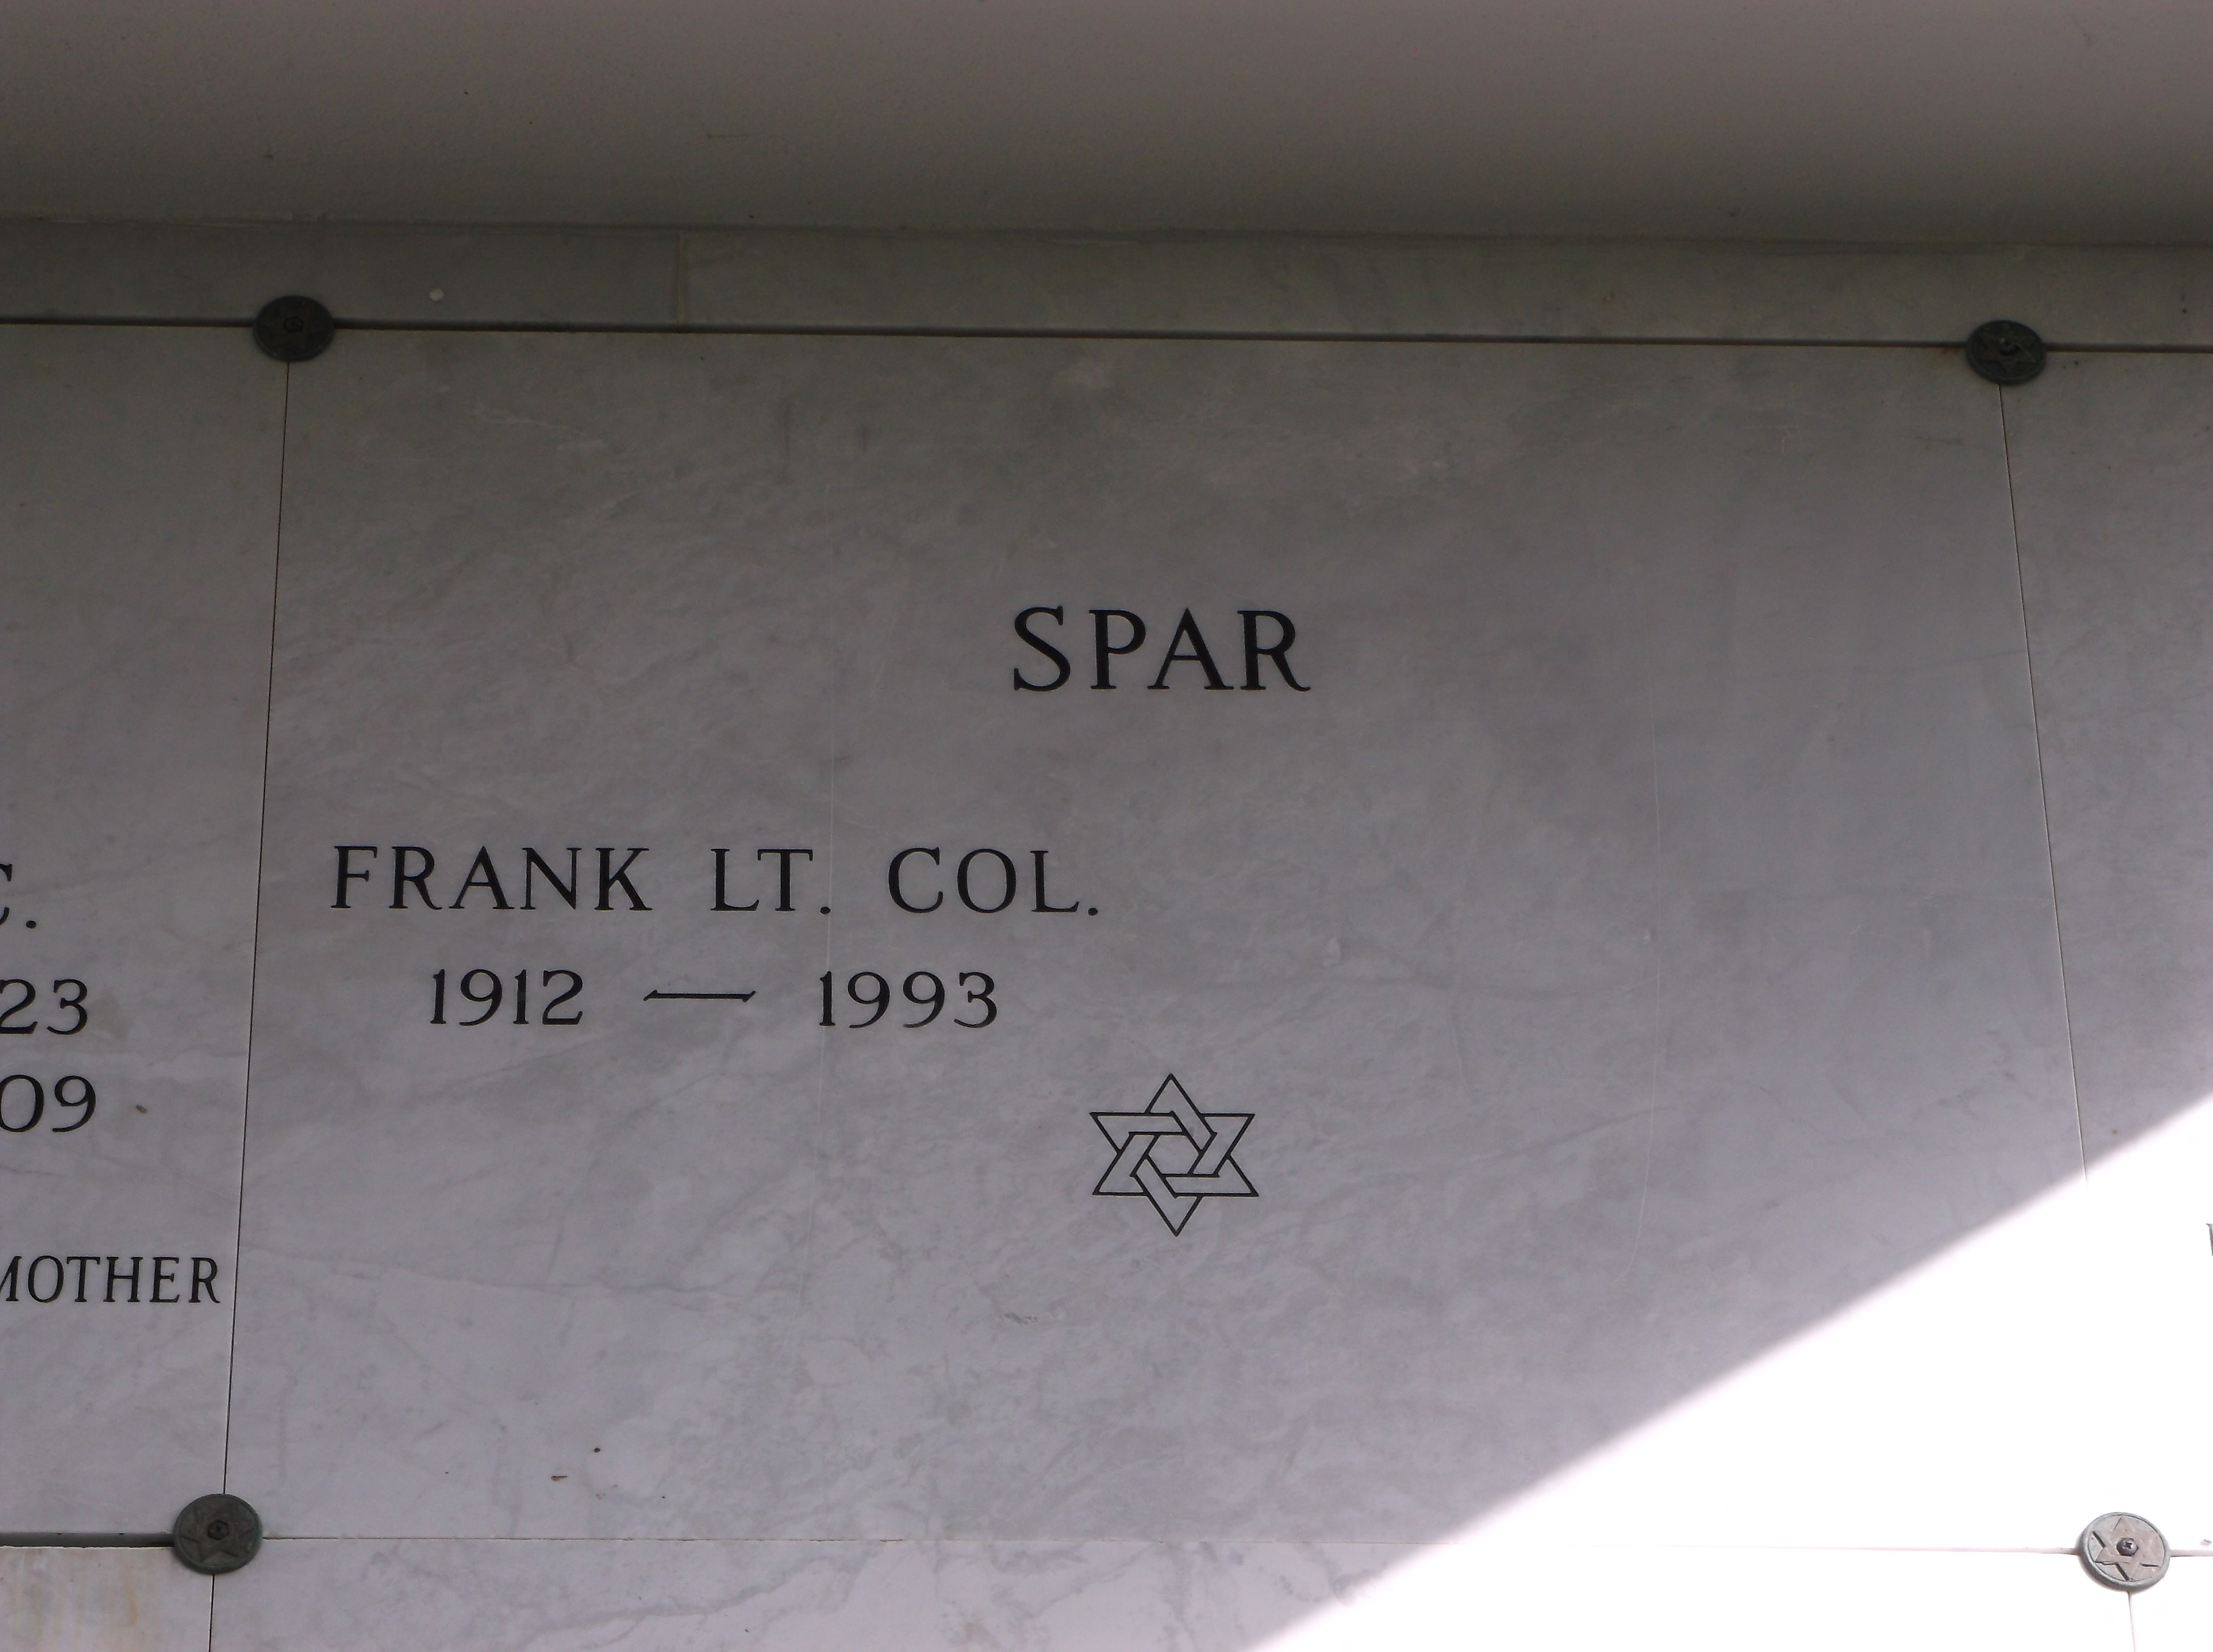 LTC Frank Spar